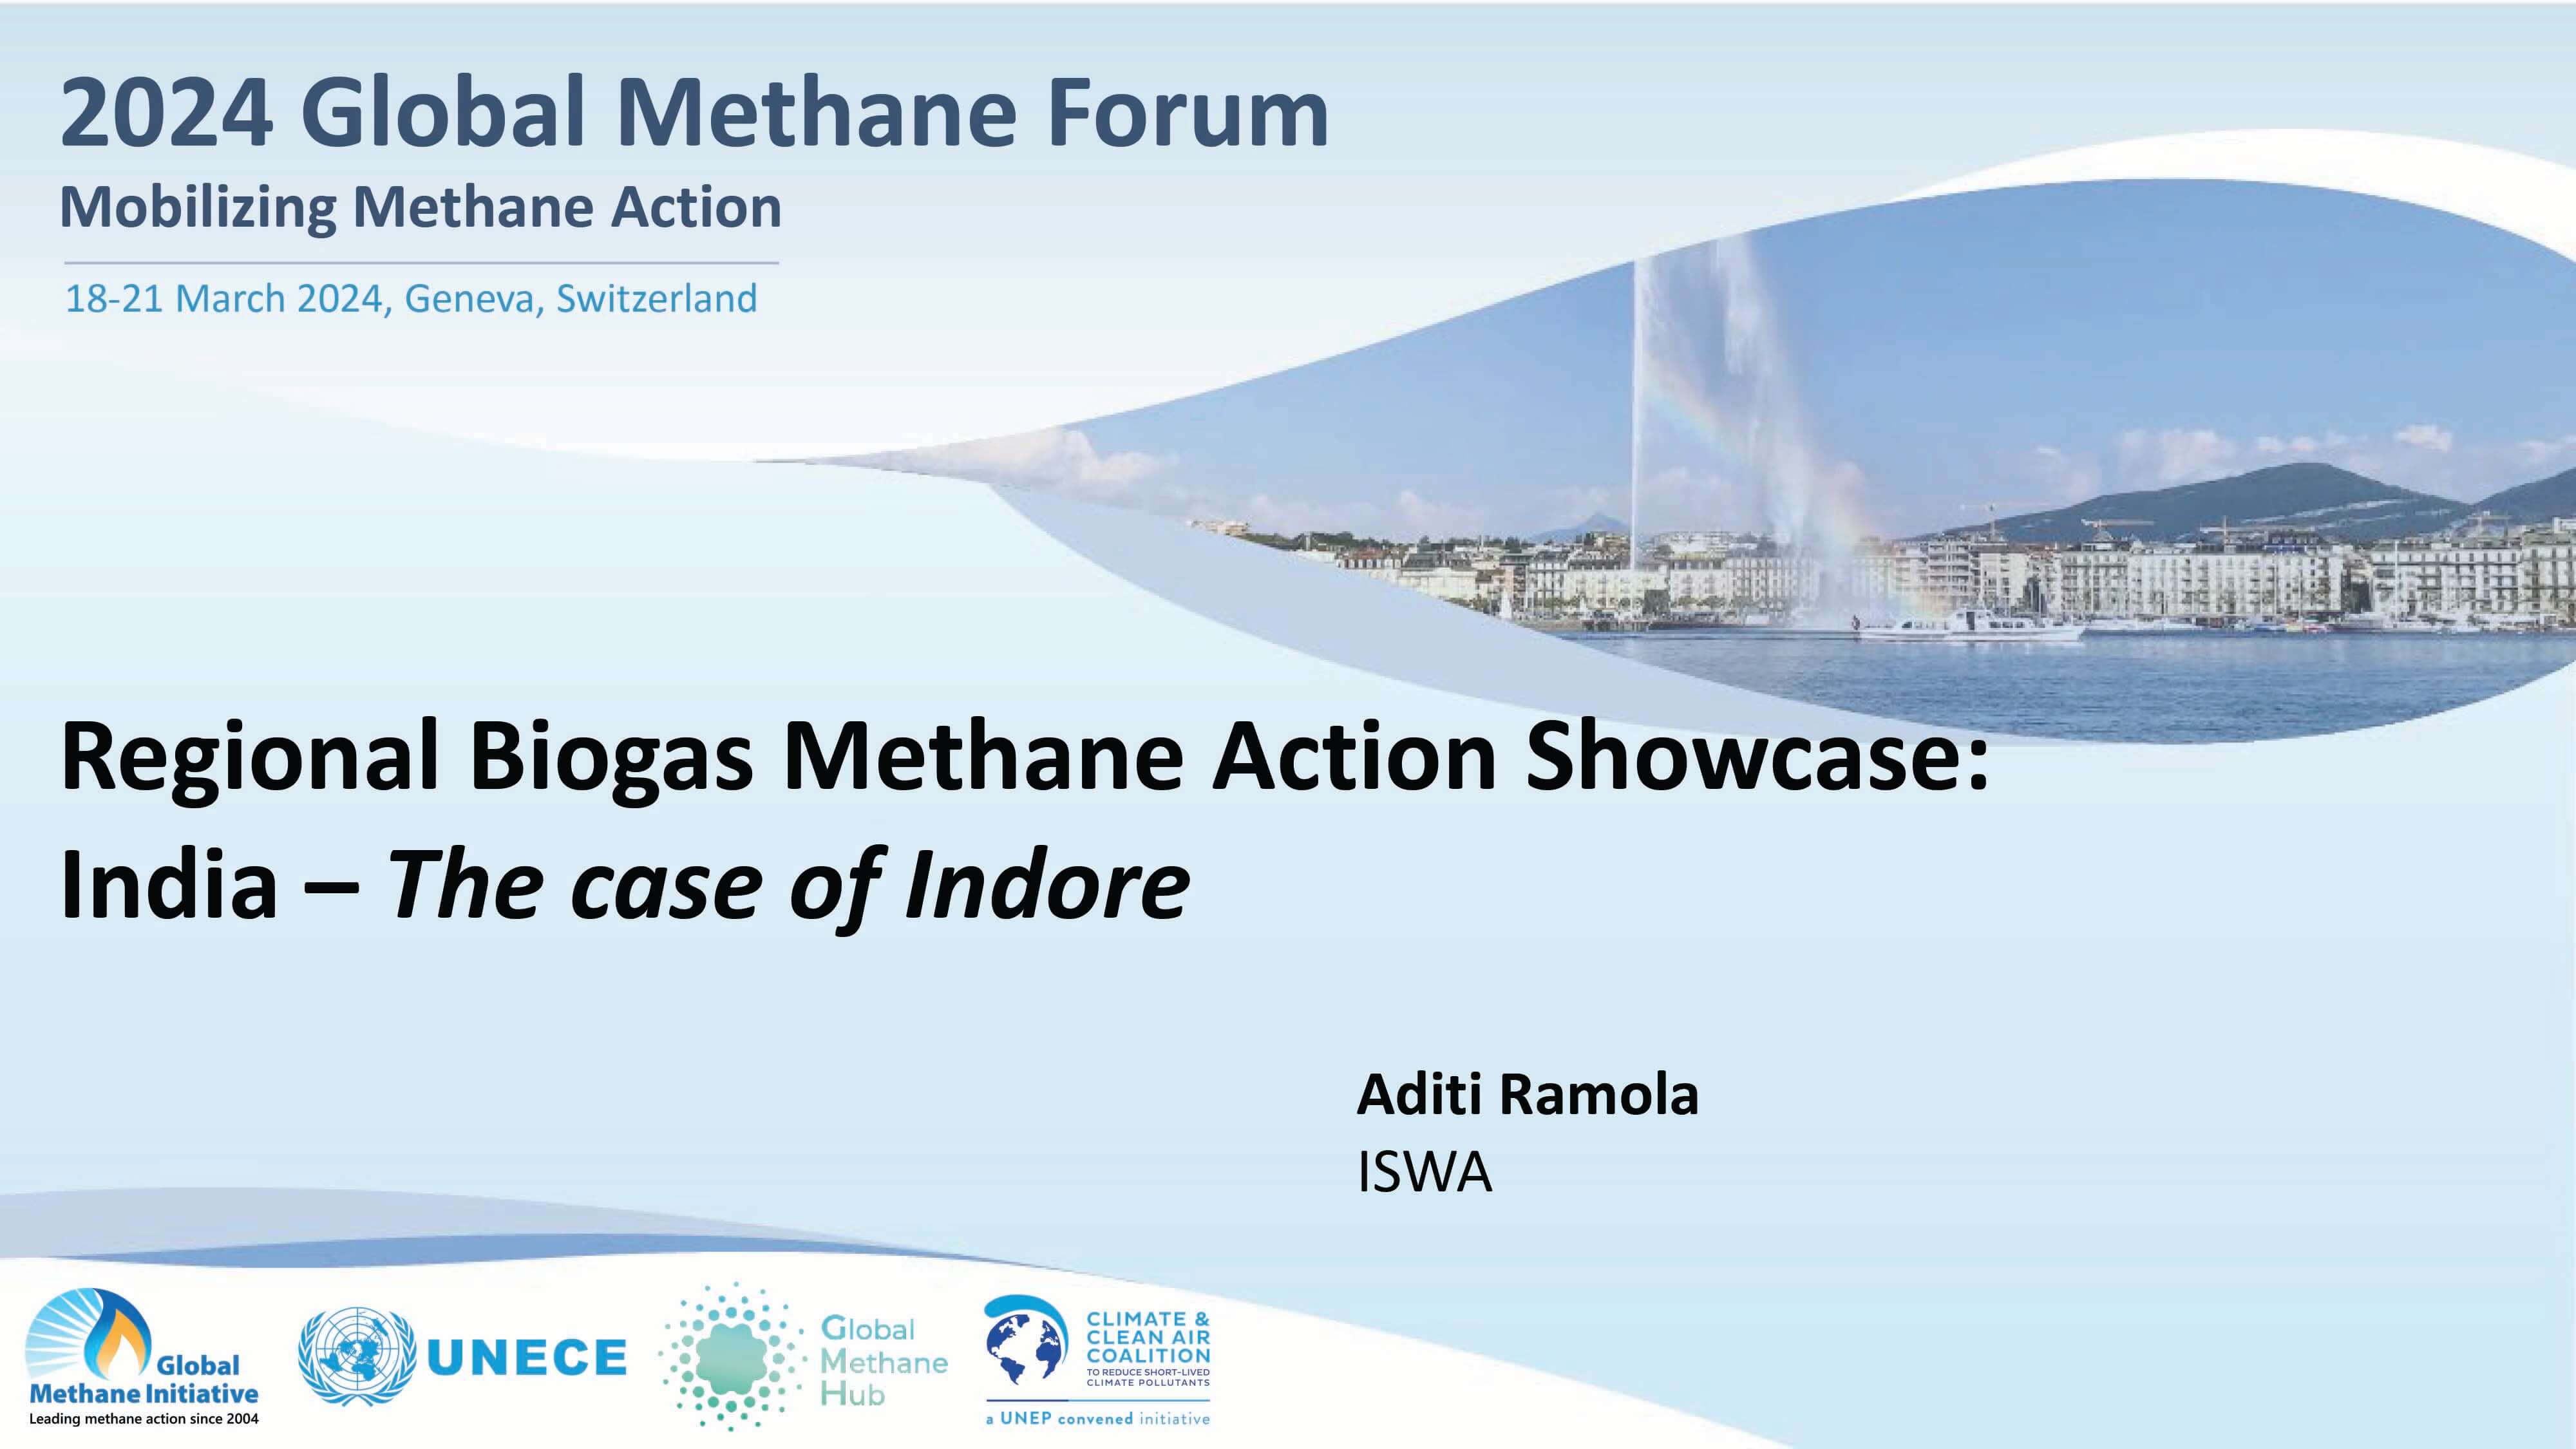 Regional Biogas Methane Action Showcase: India - The case of Indore